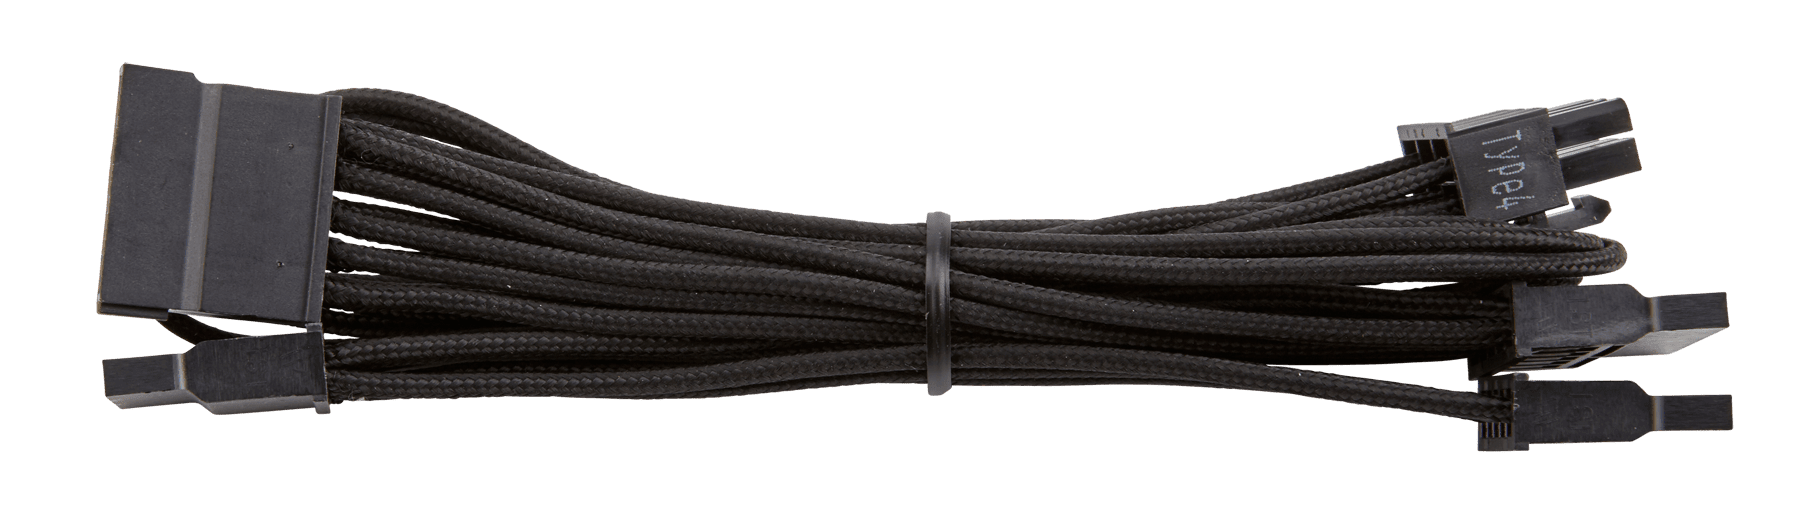 Premium Individually Sleeved SATA Cable, Type 4 (Generation 3) - Black